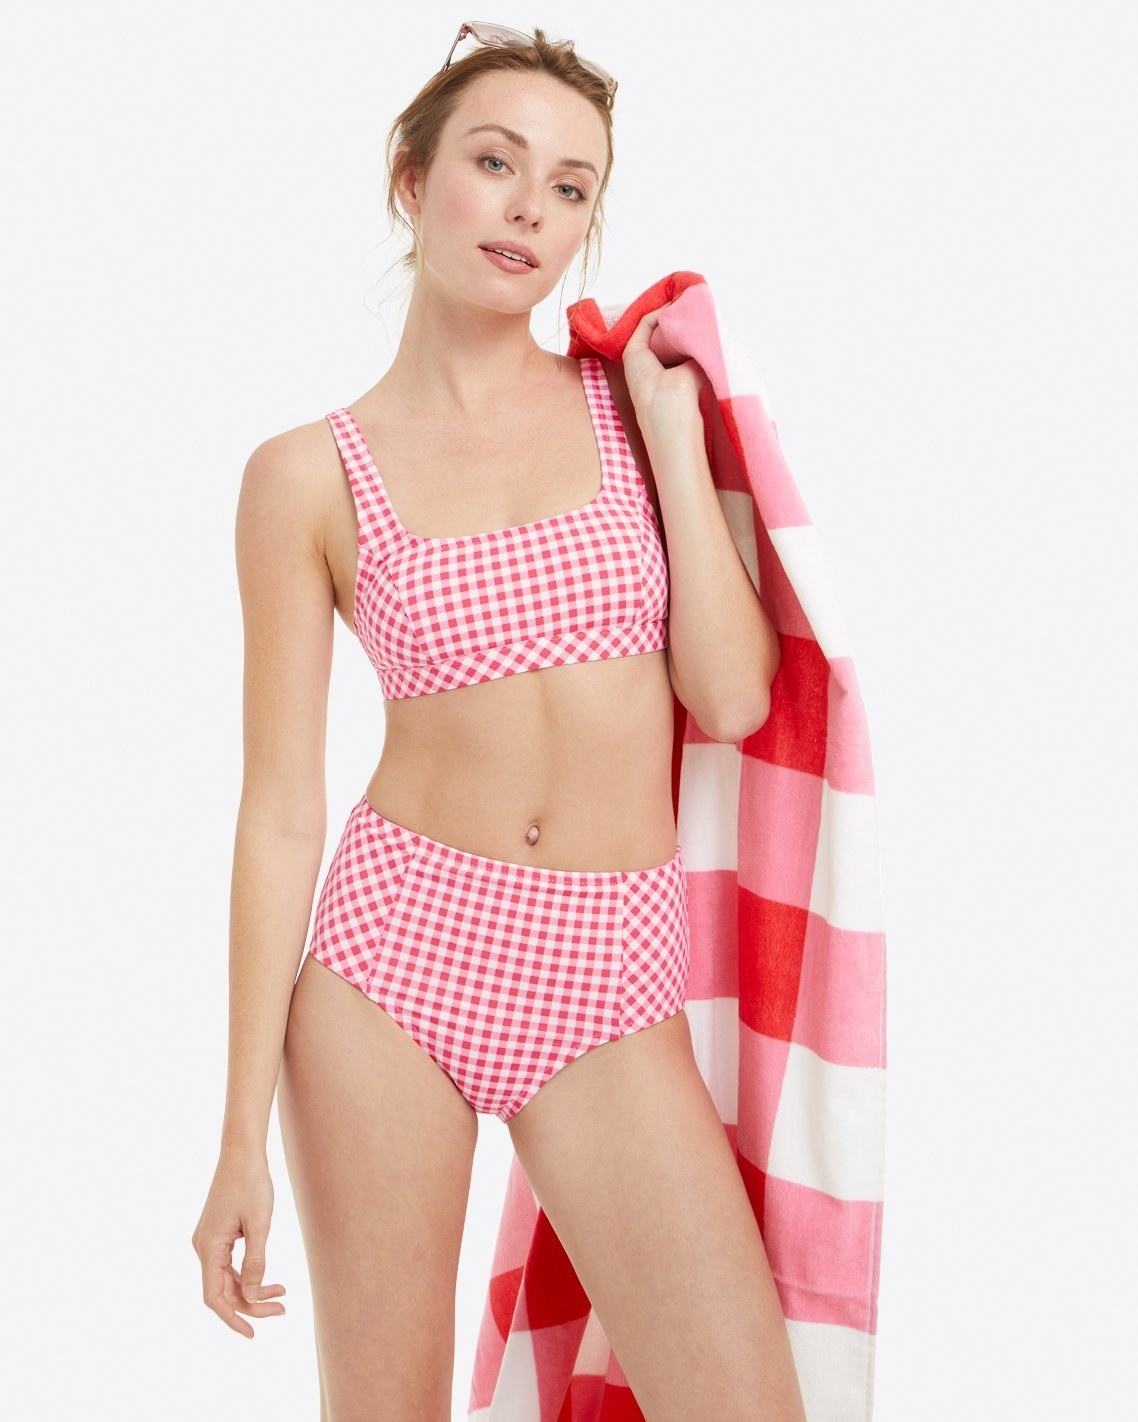 model wearing the red and white gingham bikini 